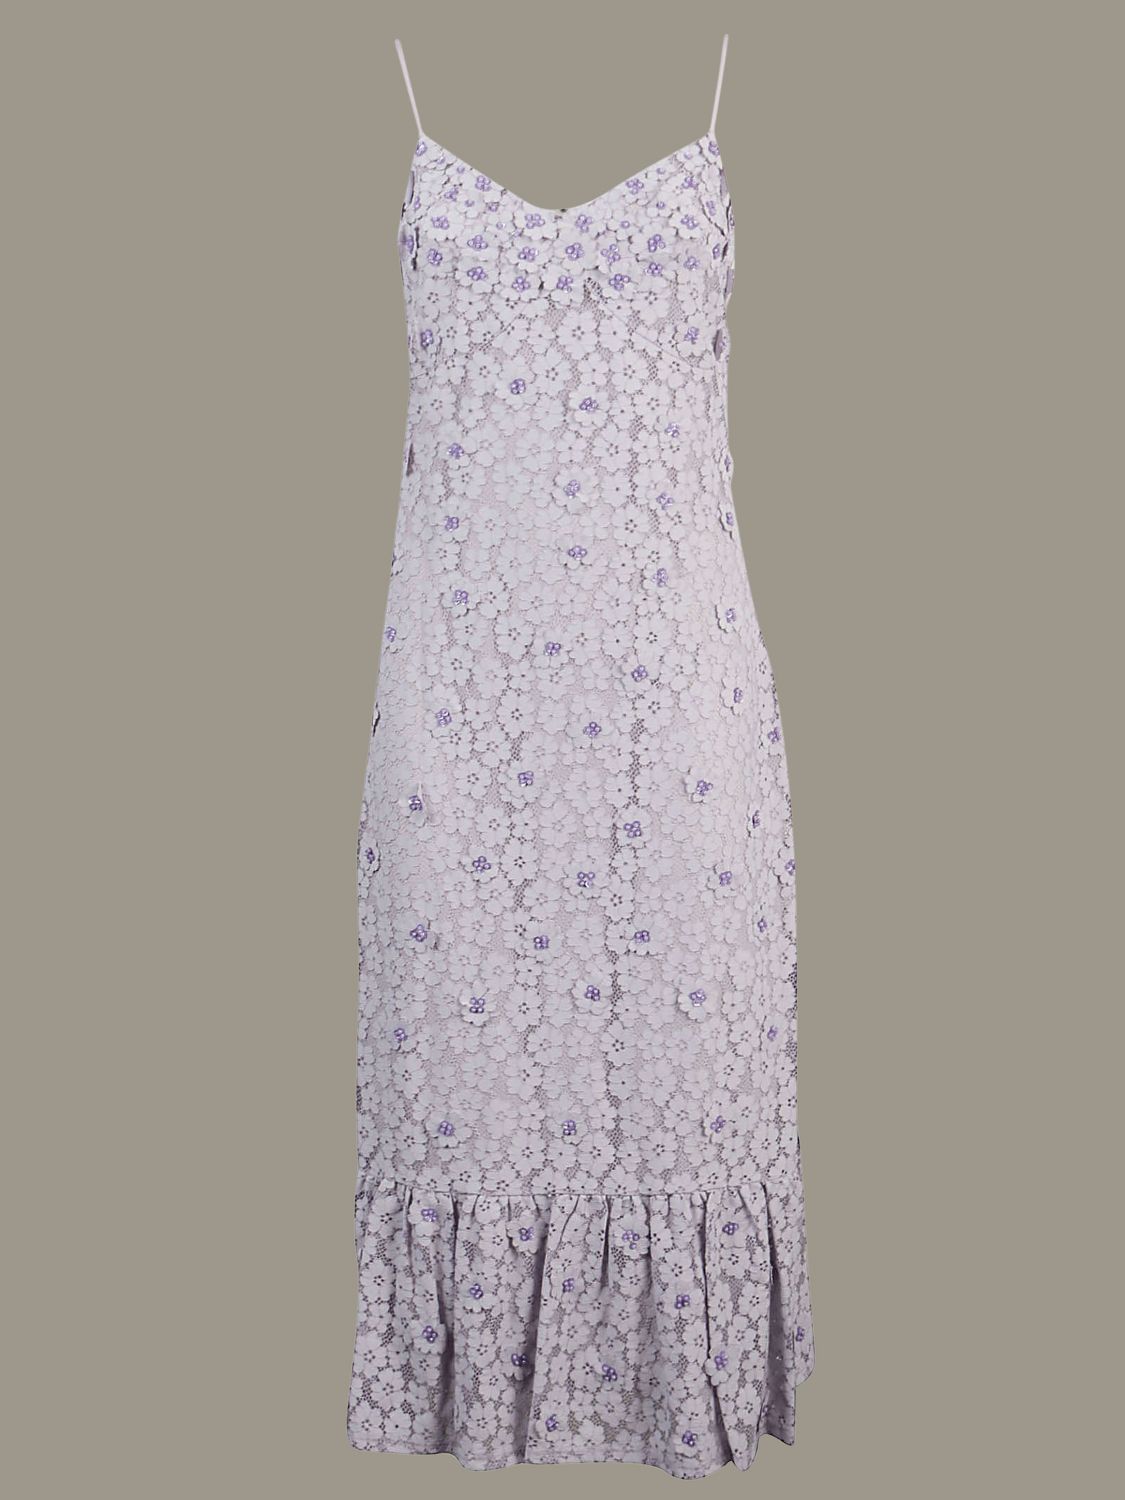 michael kors lavender dress